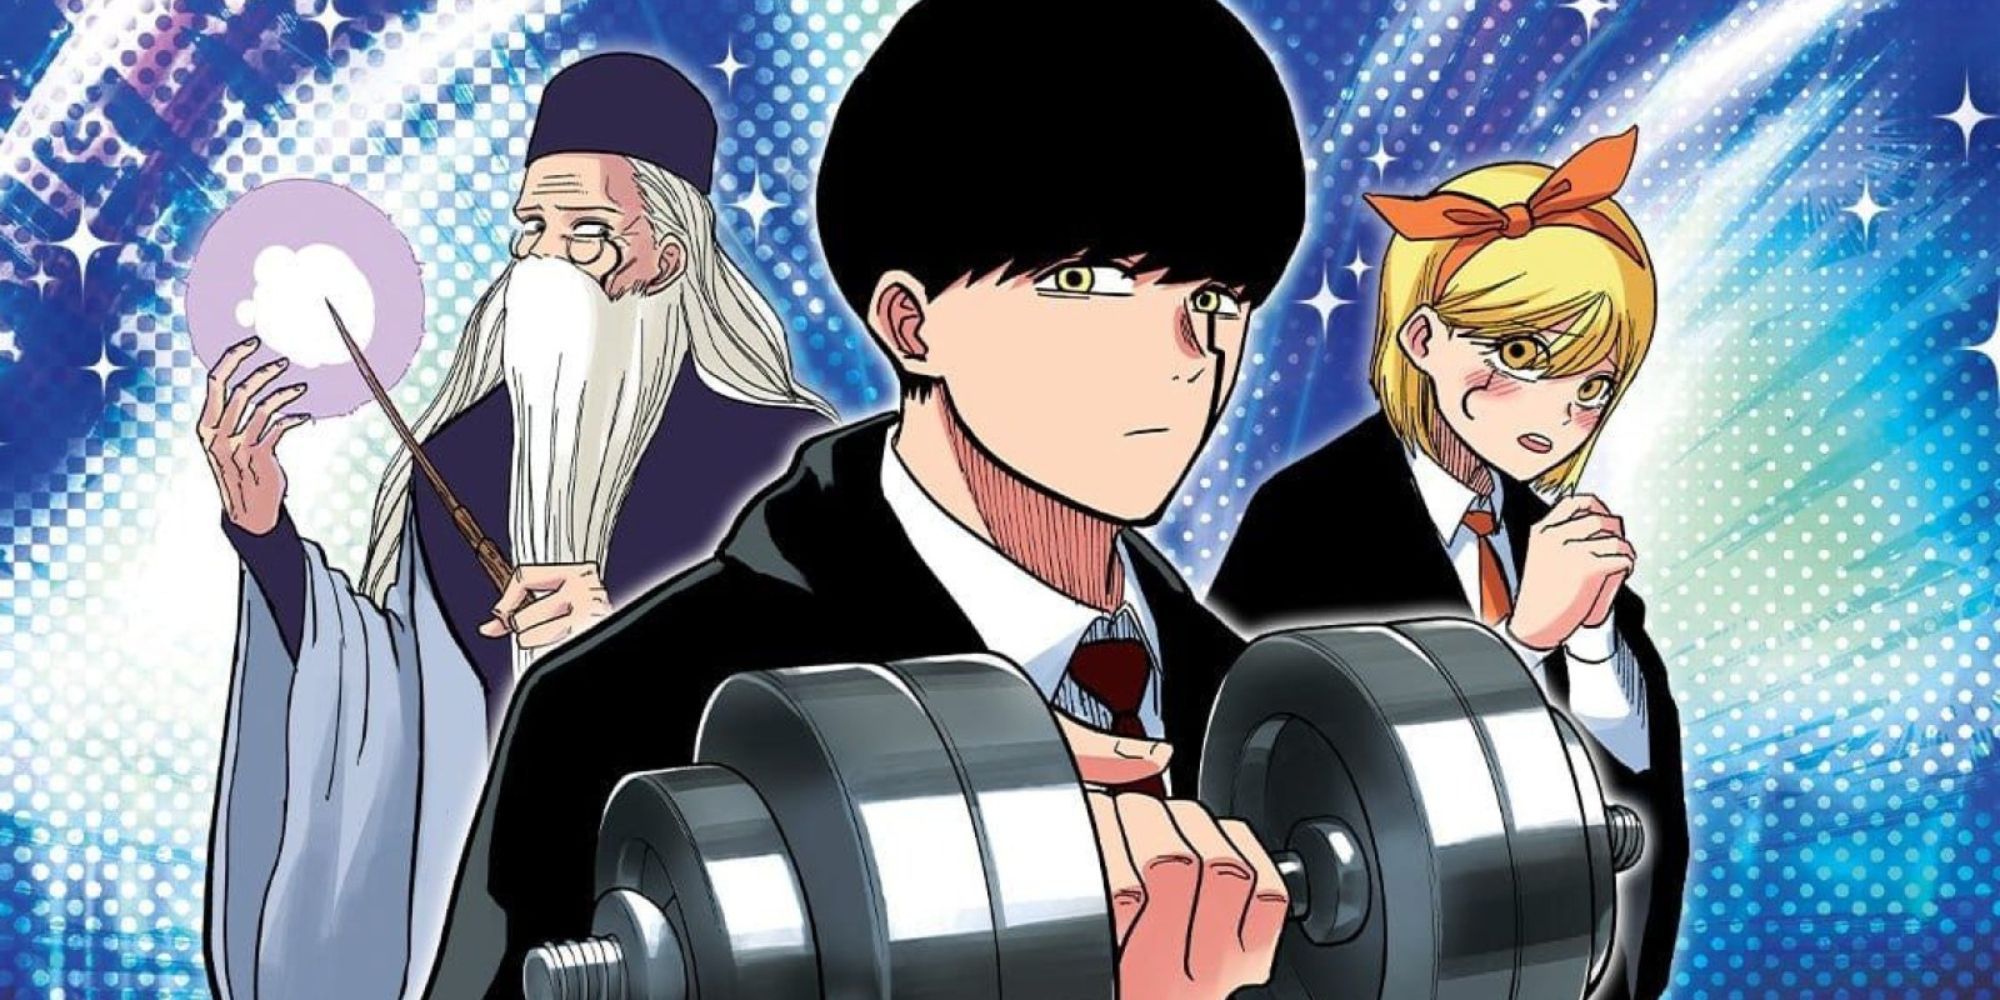 Mashle: Magic and Muscles - Anime tem 2ª temporada anunciada - AnimeNew